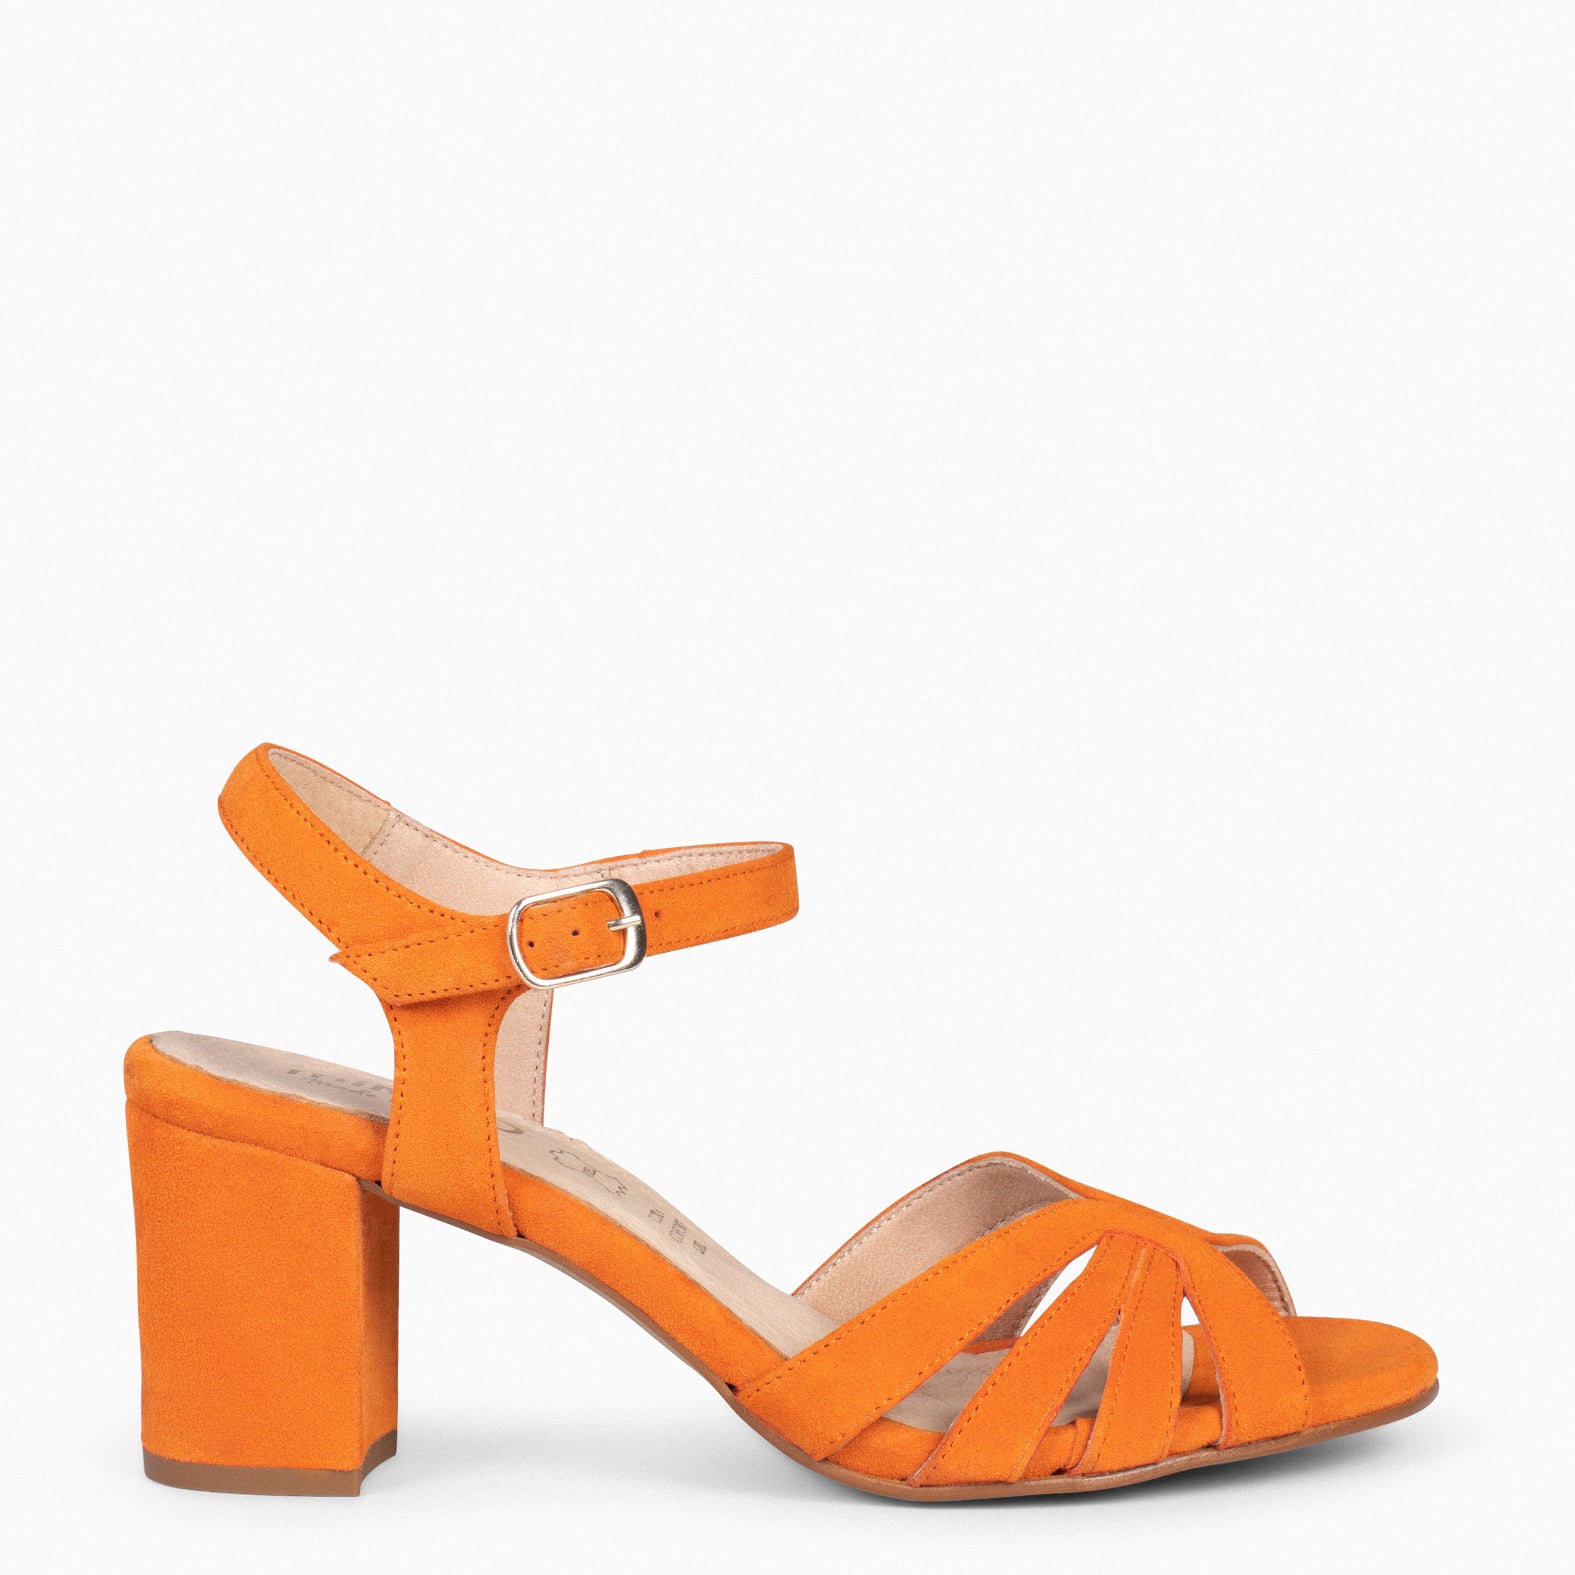 MUSE – ORANGE block heel sandals